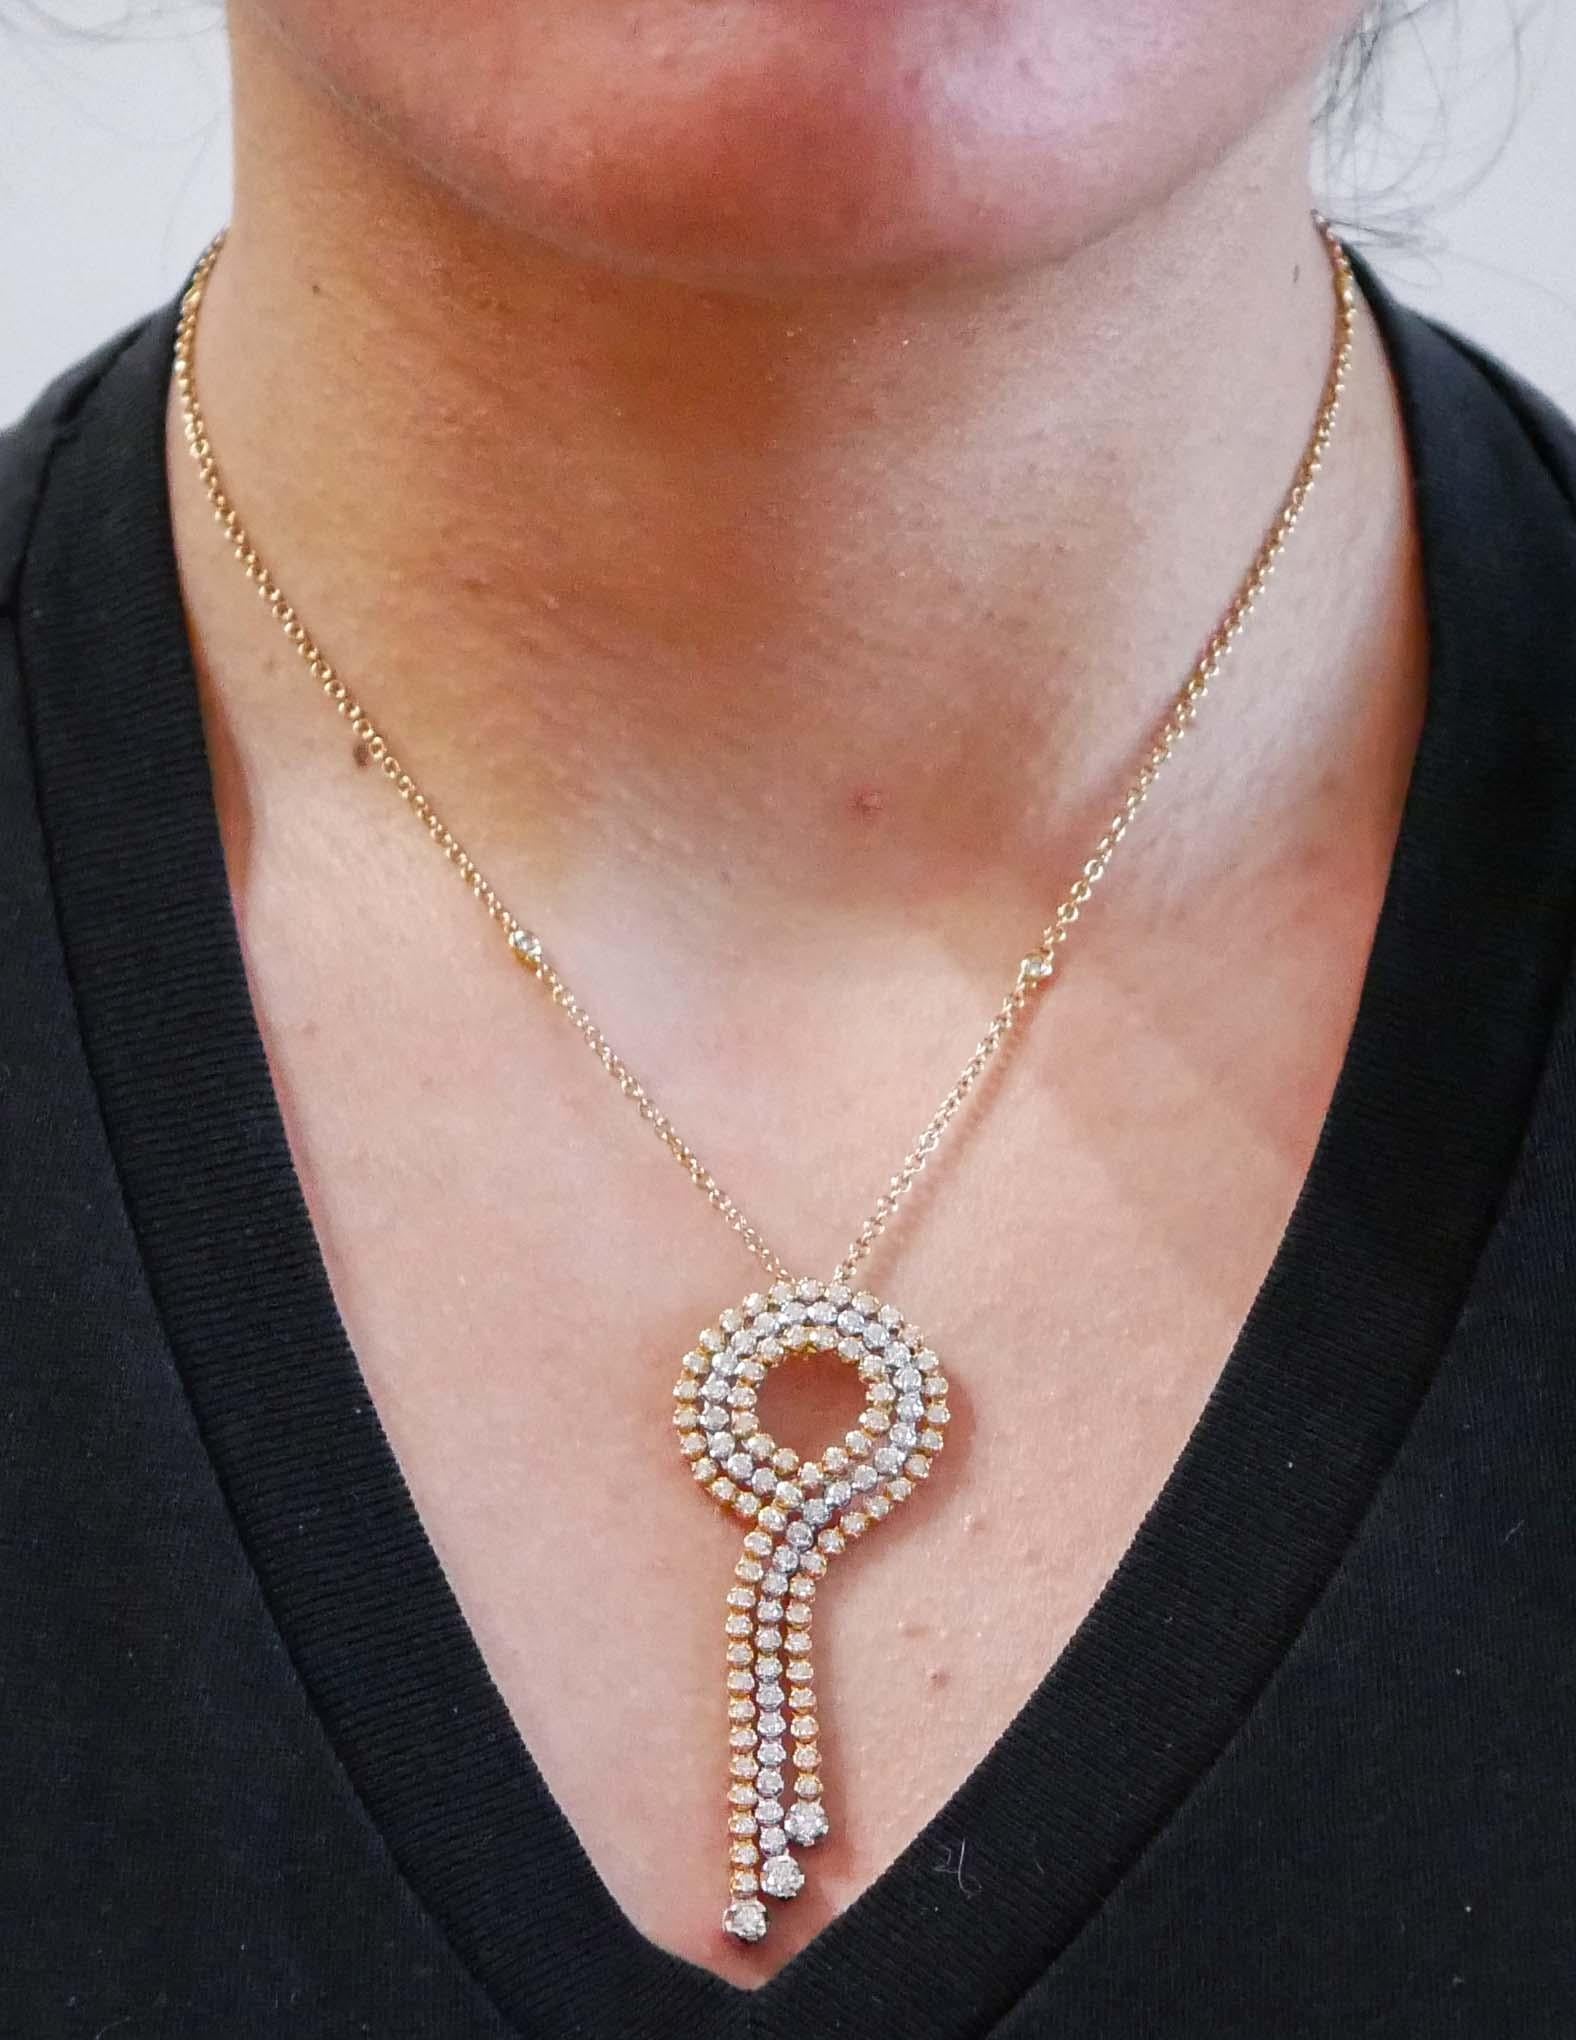 Women's Diamonds, 18 Karat Rose Gold and White Gold Pendant Necklace.